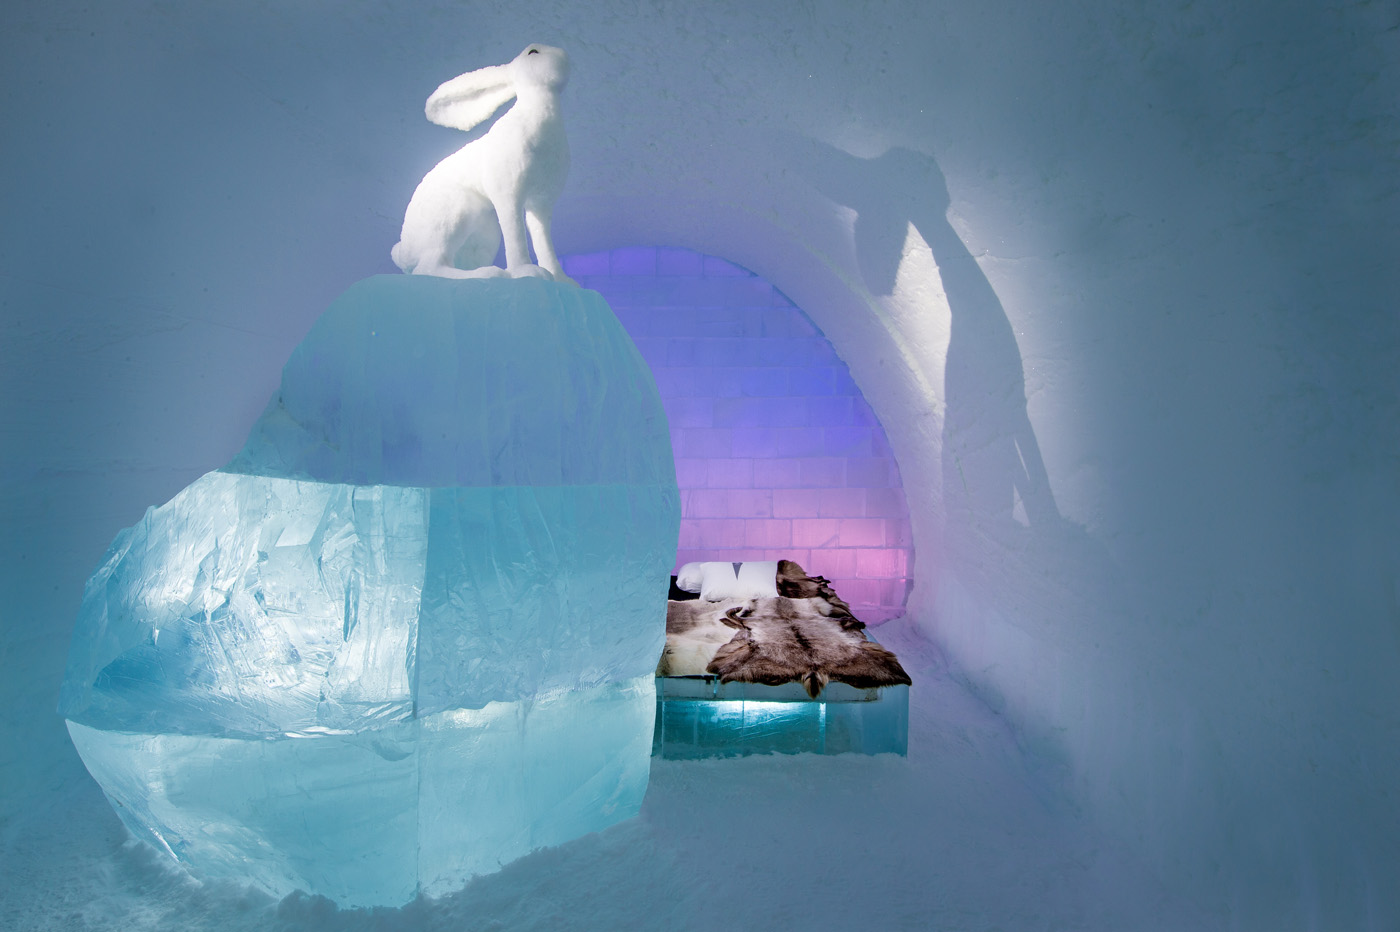 Art suite - Follow the White RabbitAnnaSofia Mååg &amp; Niklas Byman ICEHOTEL 28Photo by - Asaf Kliger